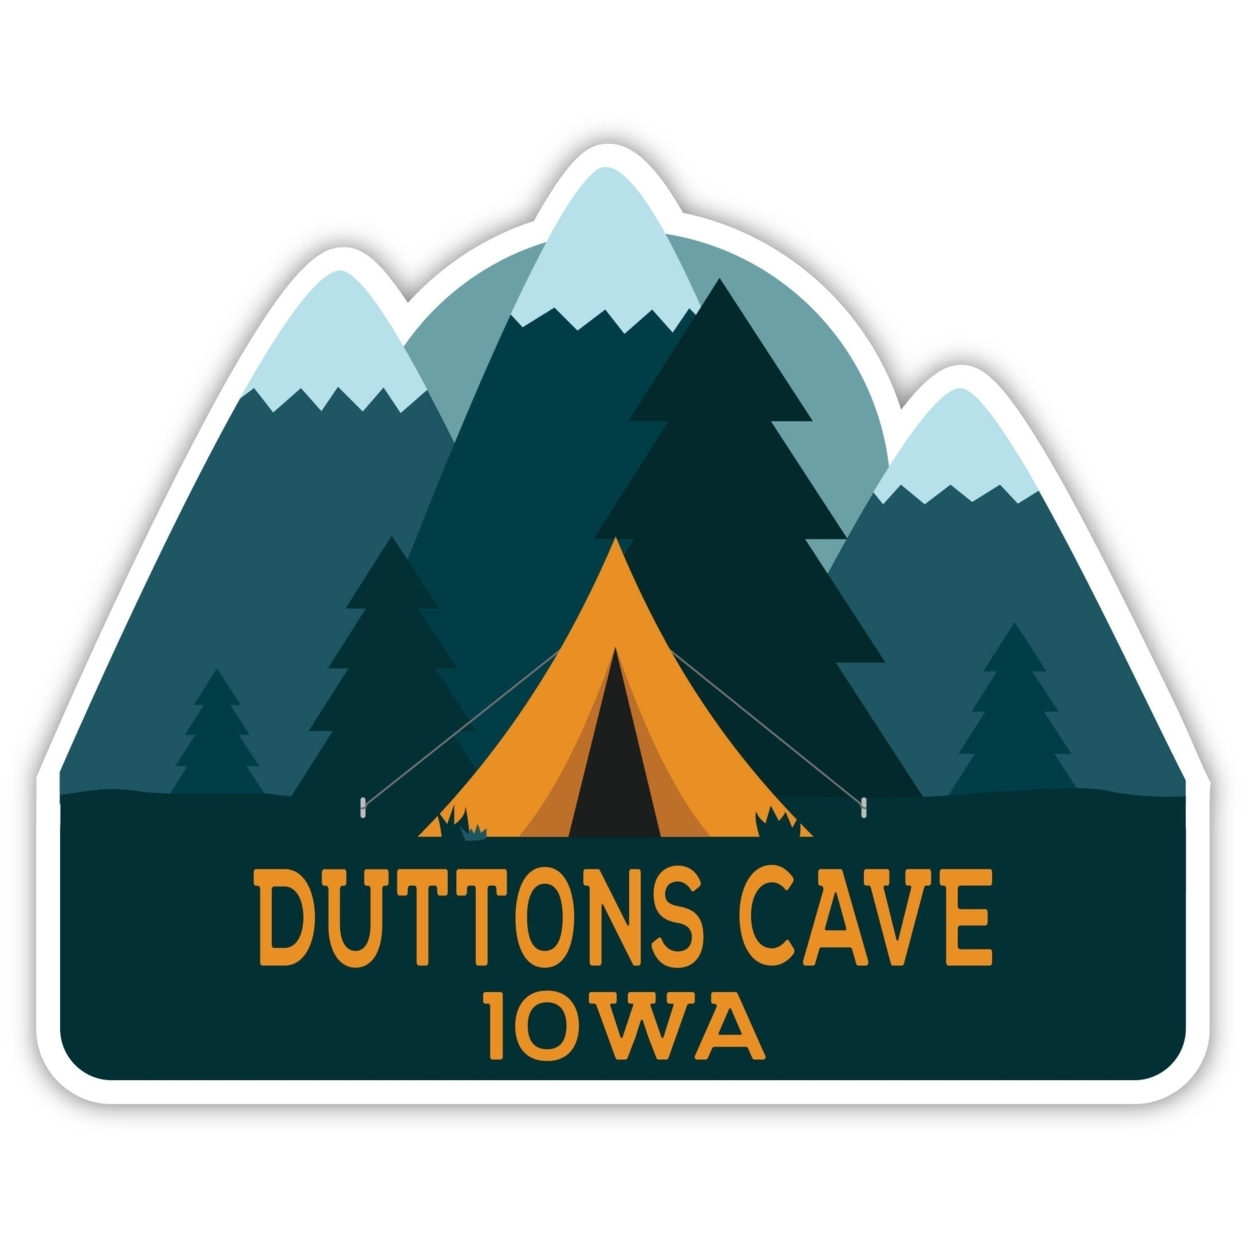 Duttons Cave Iowa Souvenir Decorative Stickers (Choose Theme And Size) - 4-Pack, 4-Inch, Tent